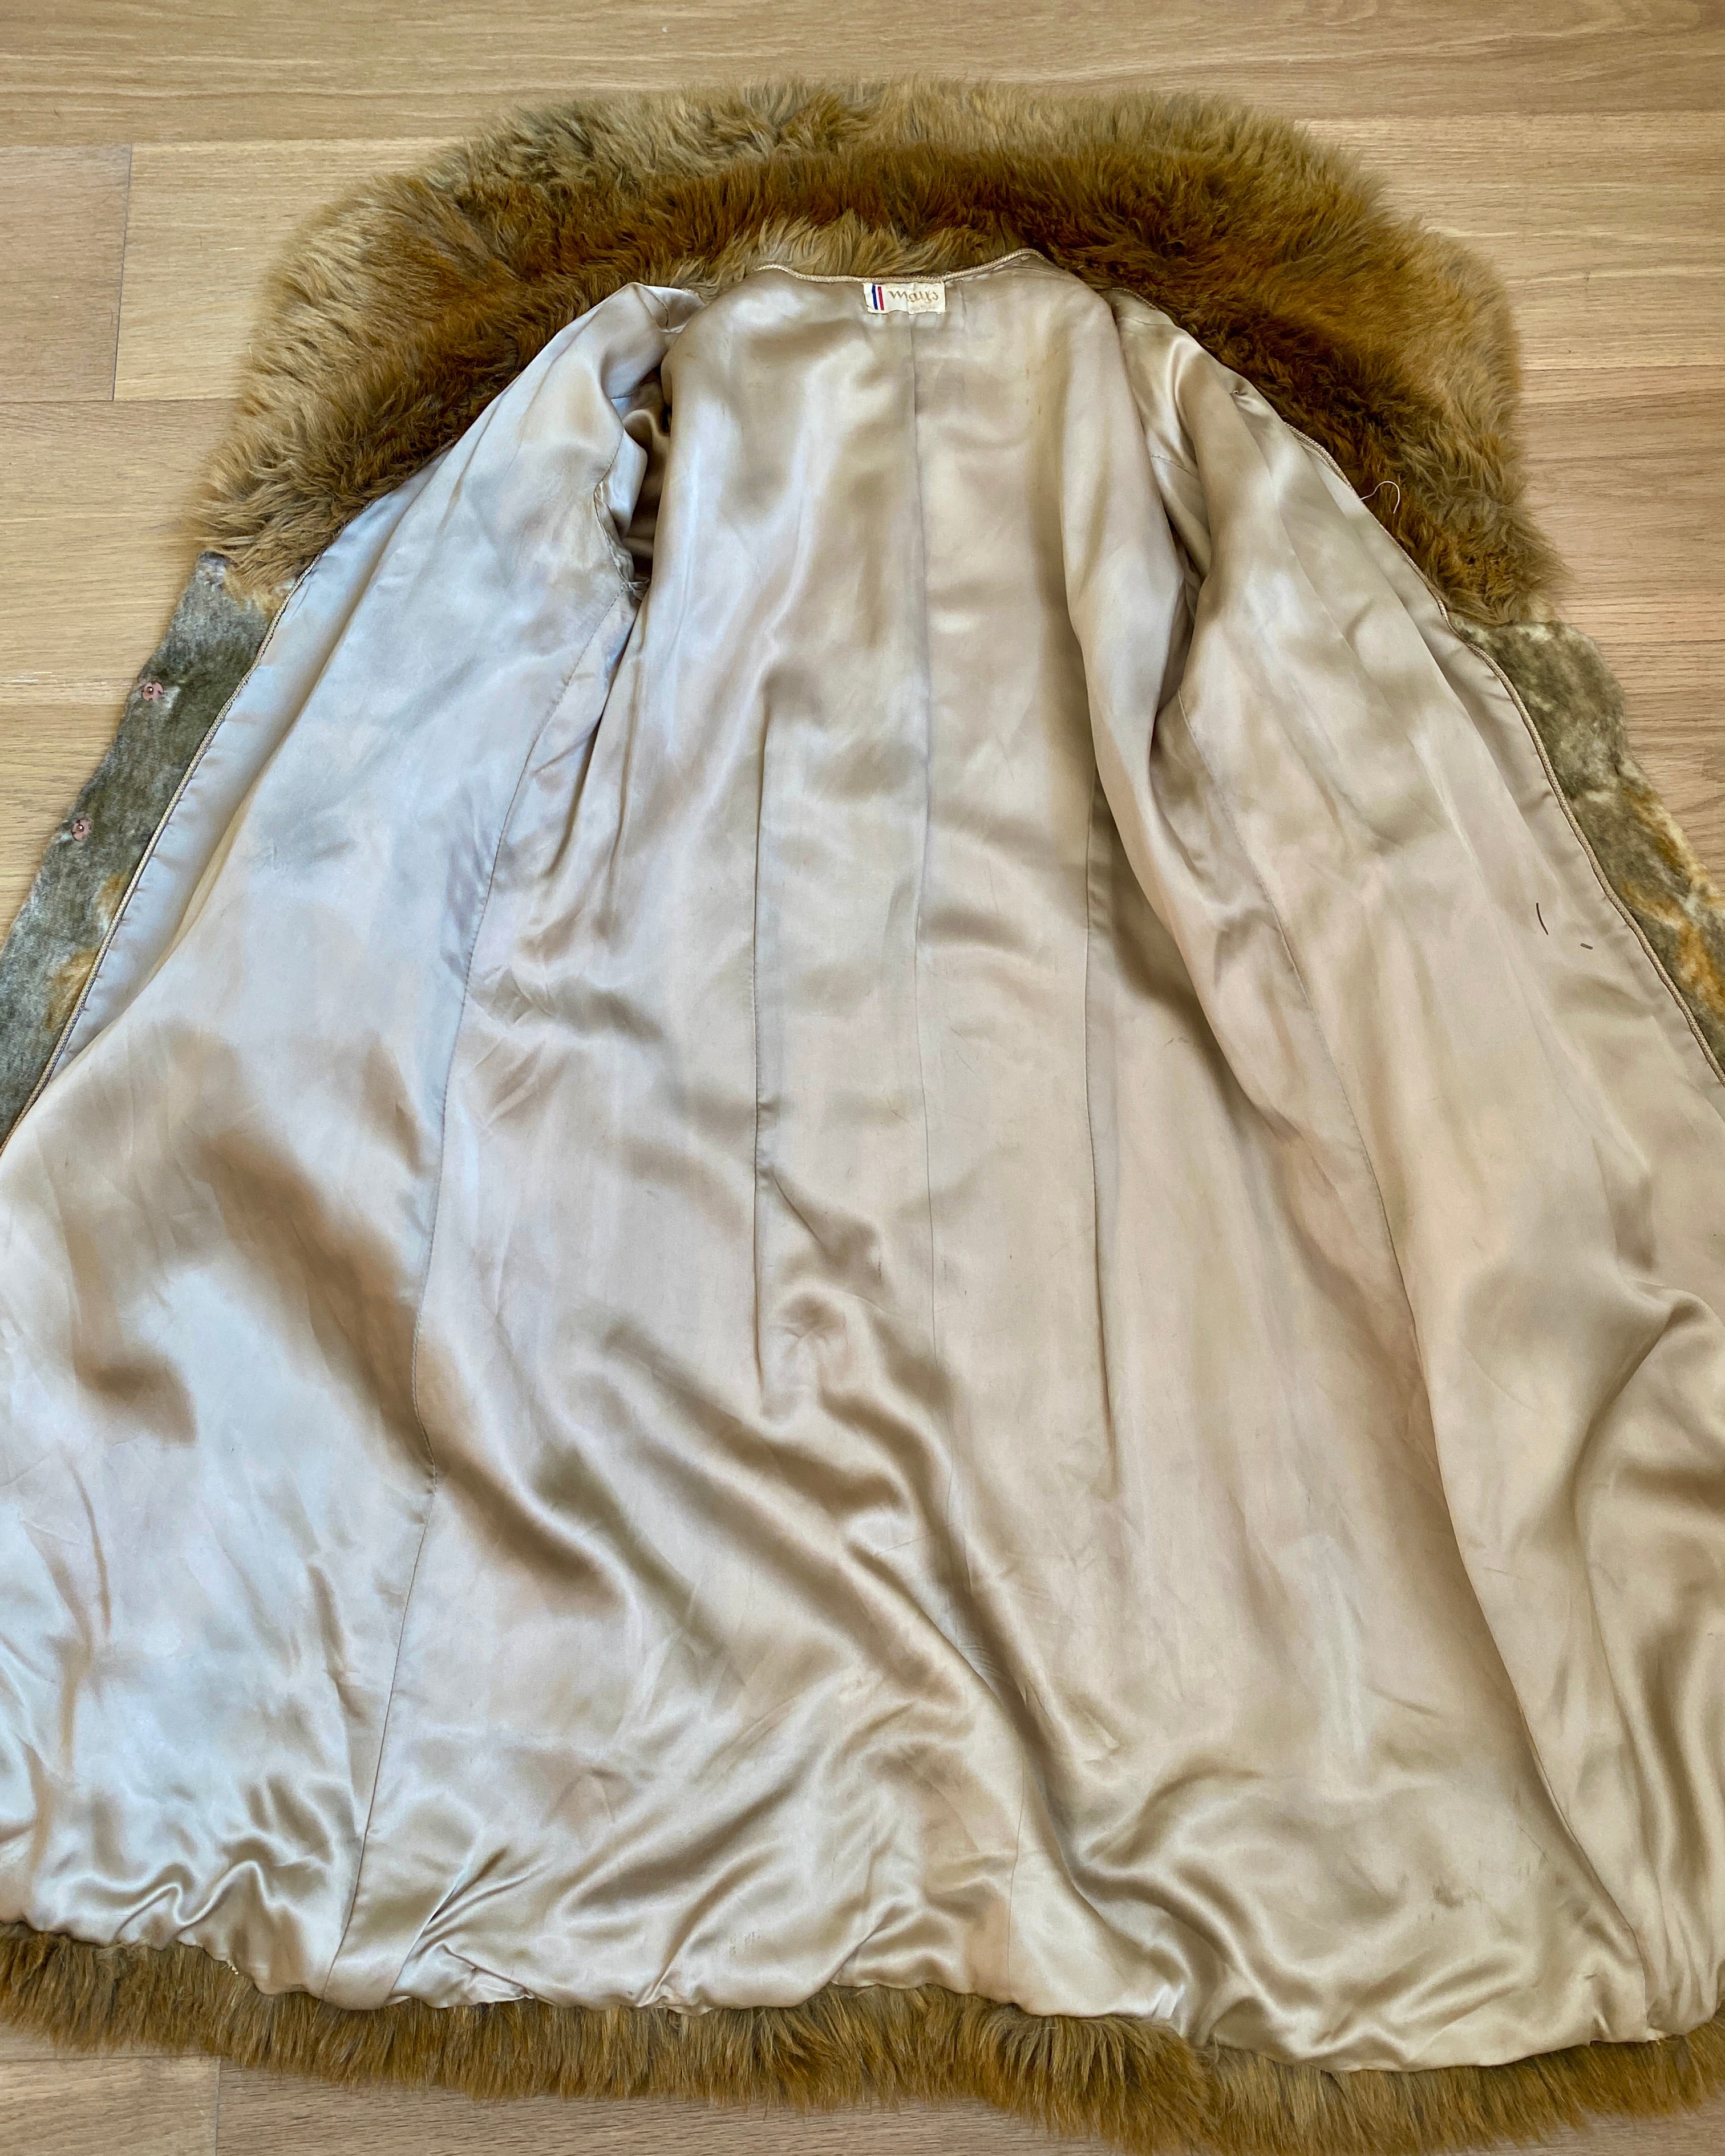 Vintage 1970s MAYS Faux Fur Velvet Penny Lane Coat ML 8 Made in France